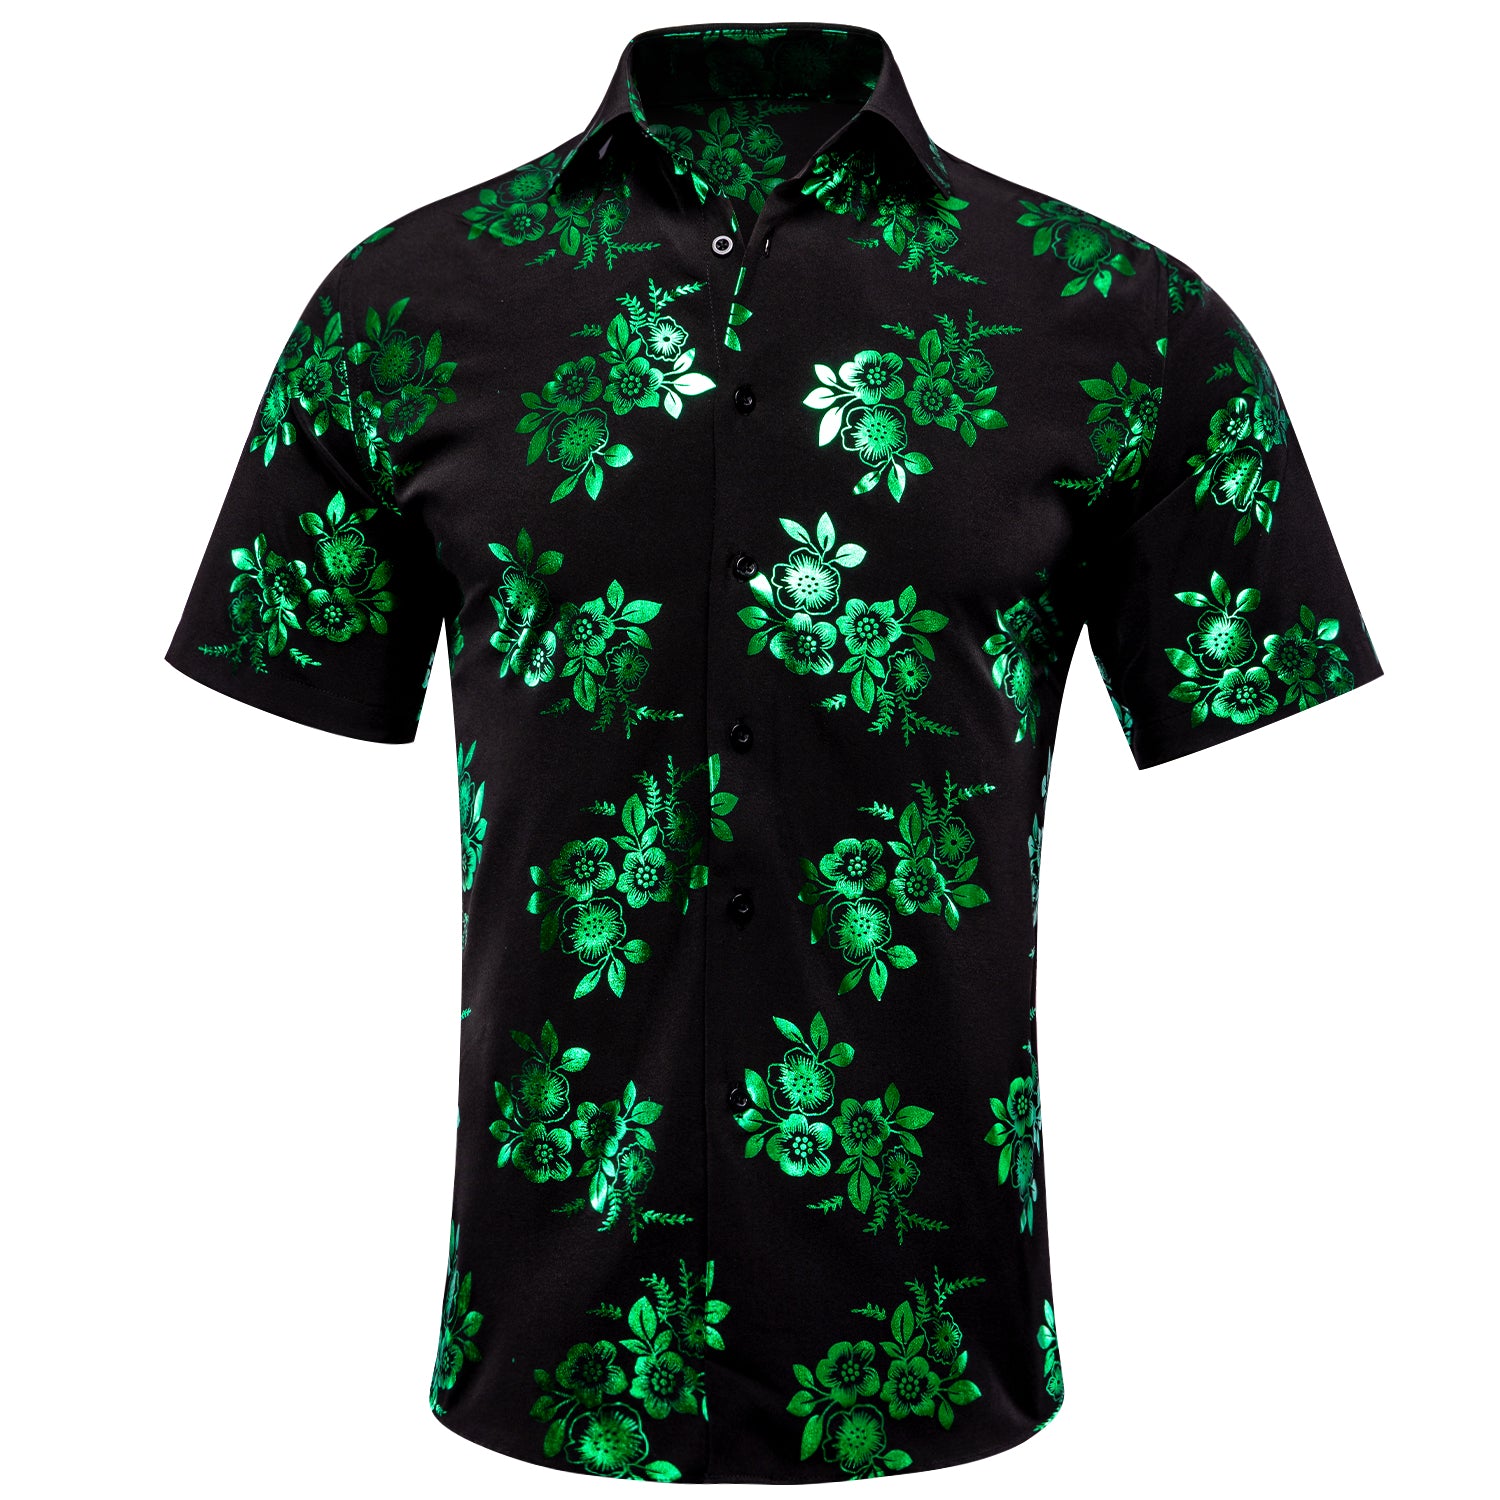 Clearance Sale New Black Green Floral Men's Short Sleeve Shirt